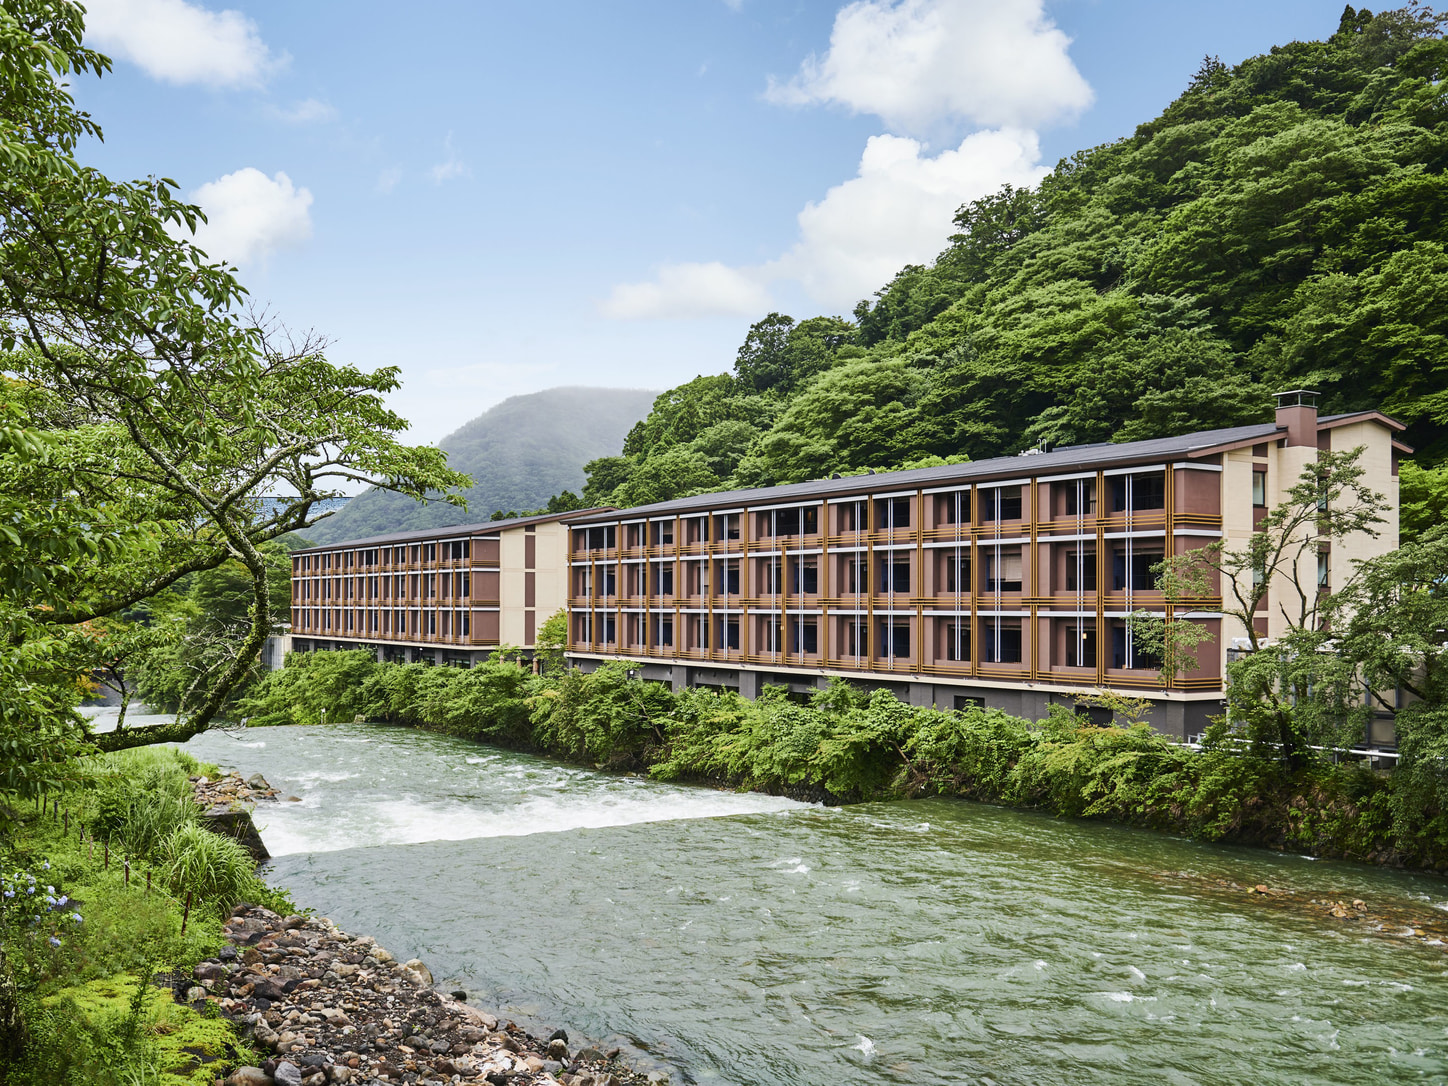 Hotel Indigo Hakone Gora: New Onsen Hotel Blends Tradition and Contemporary Style